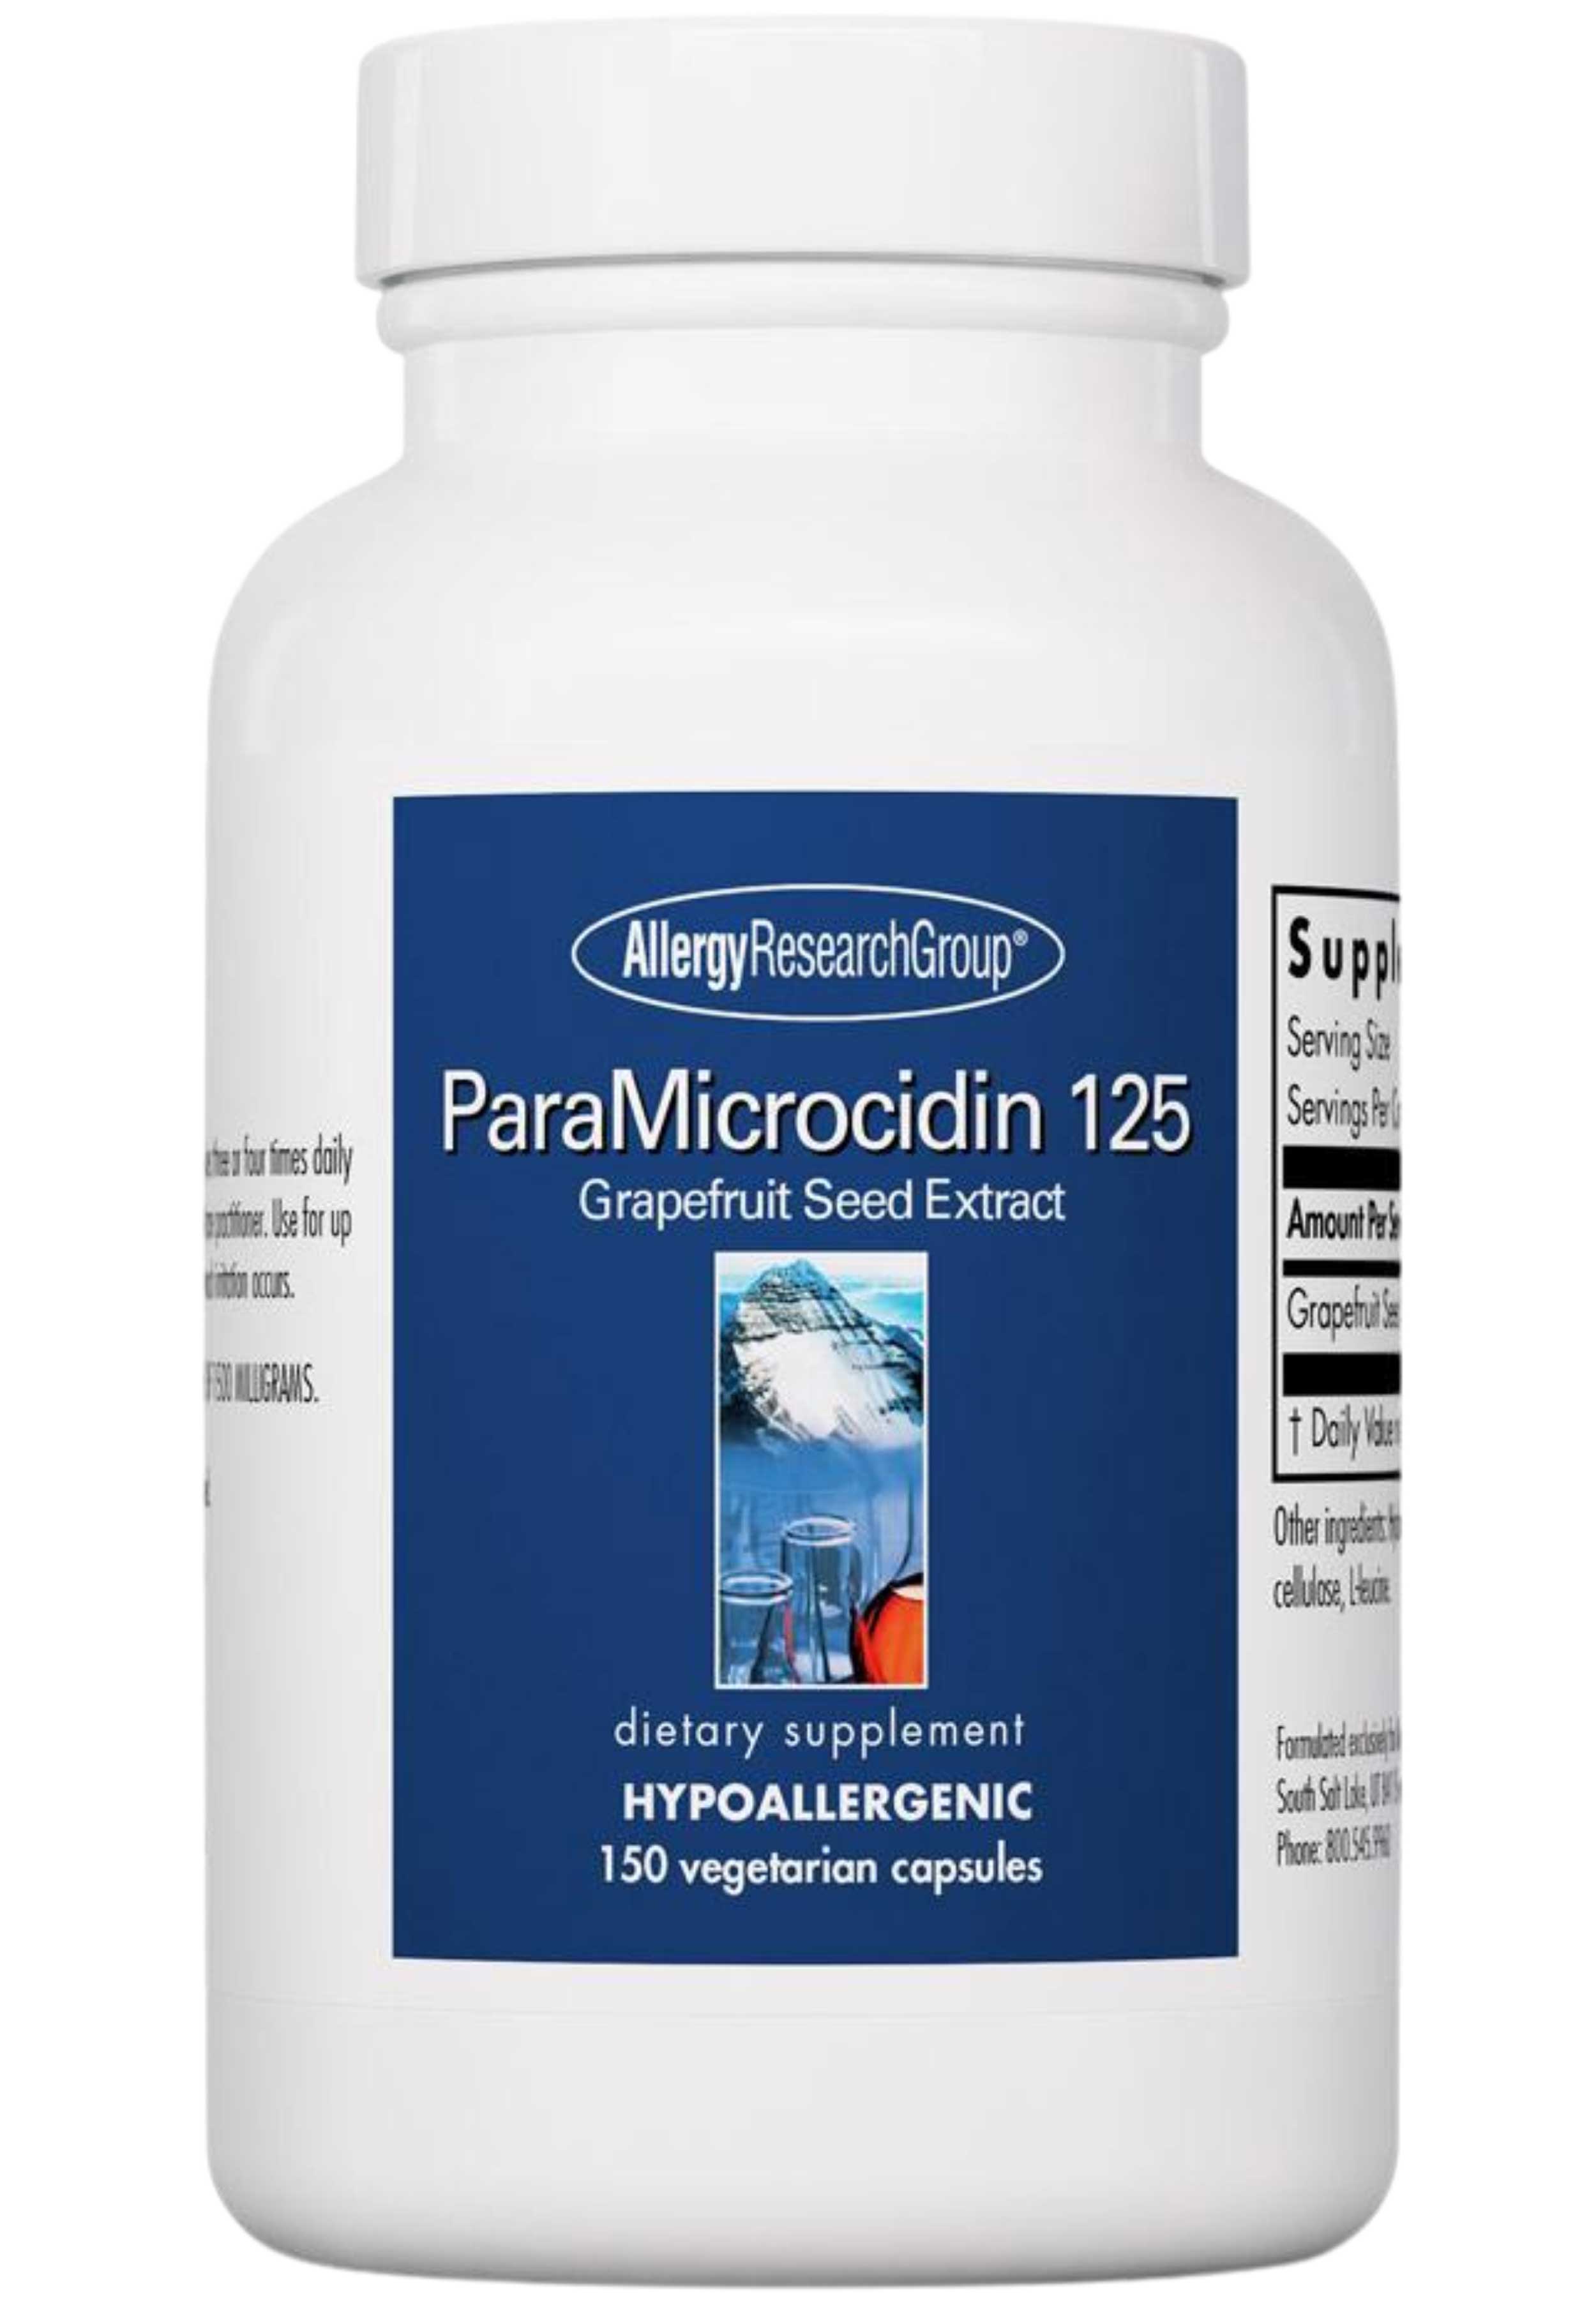 Allergy Research Group ParaMicrocidin 125